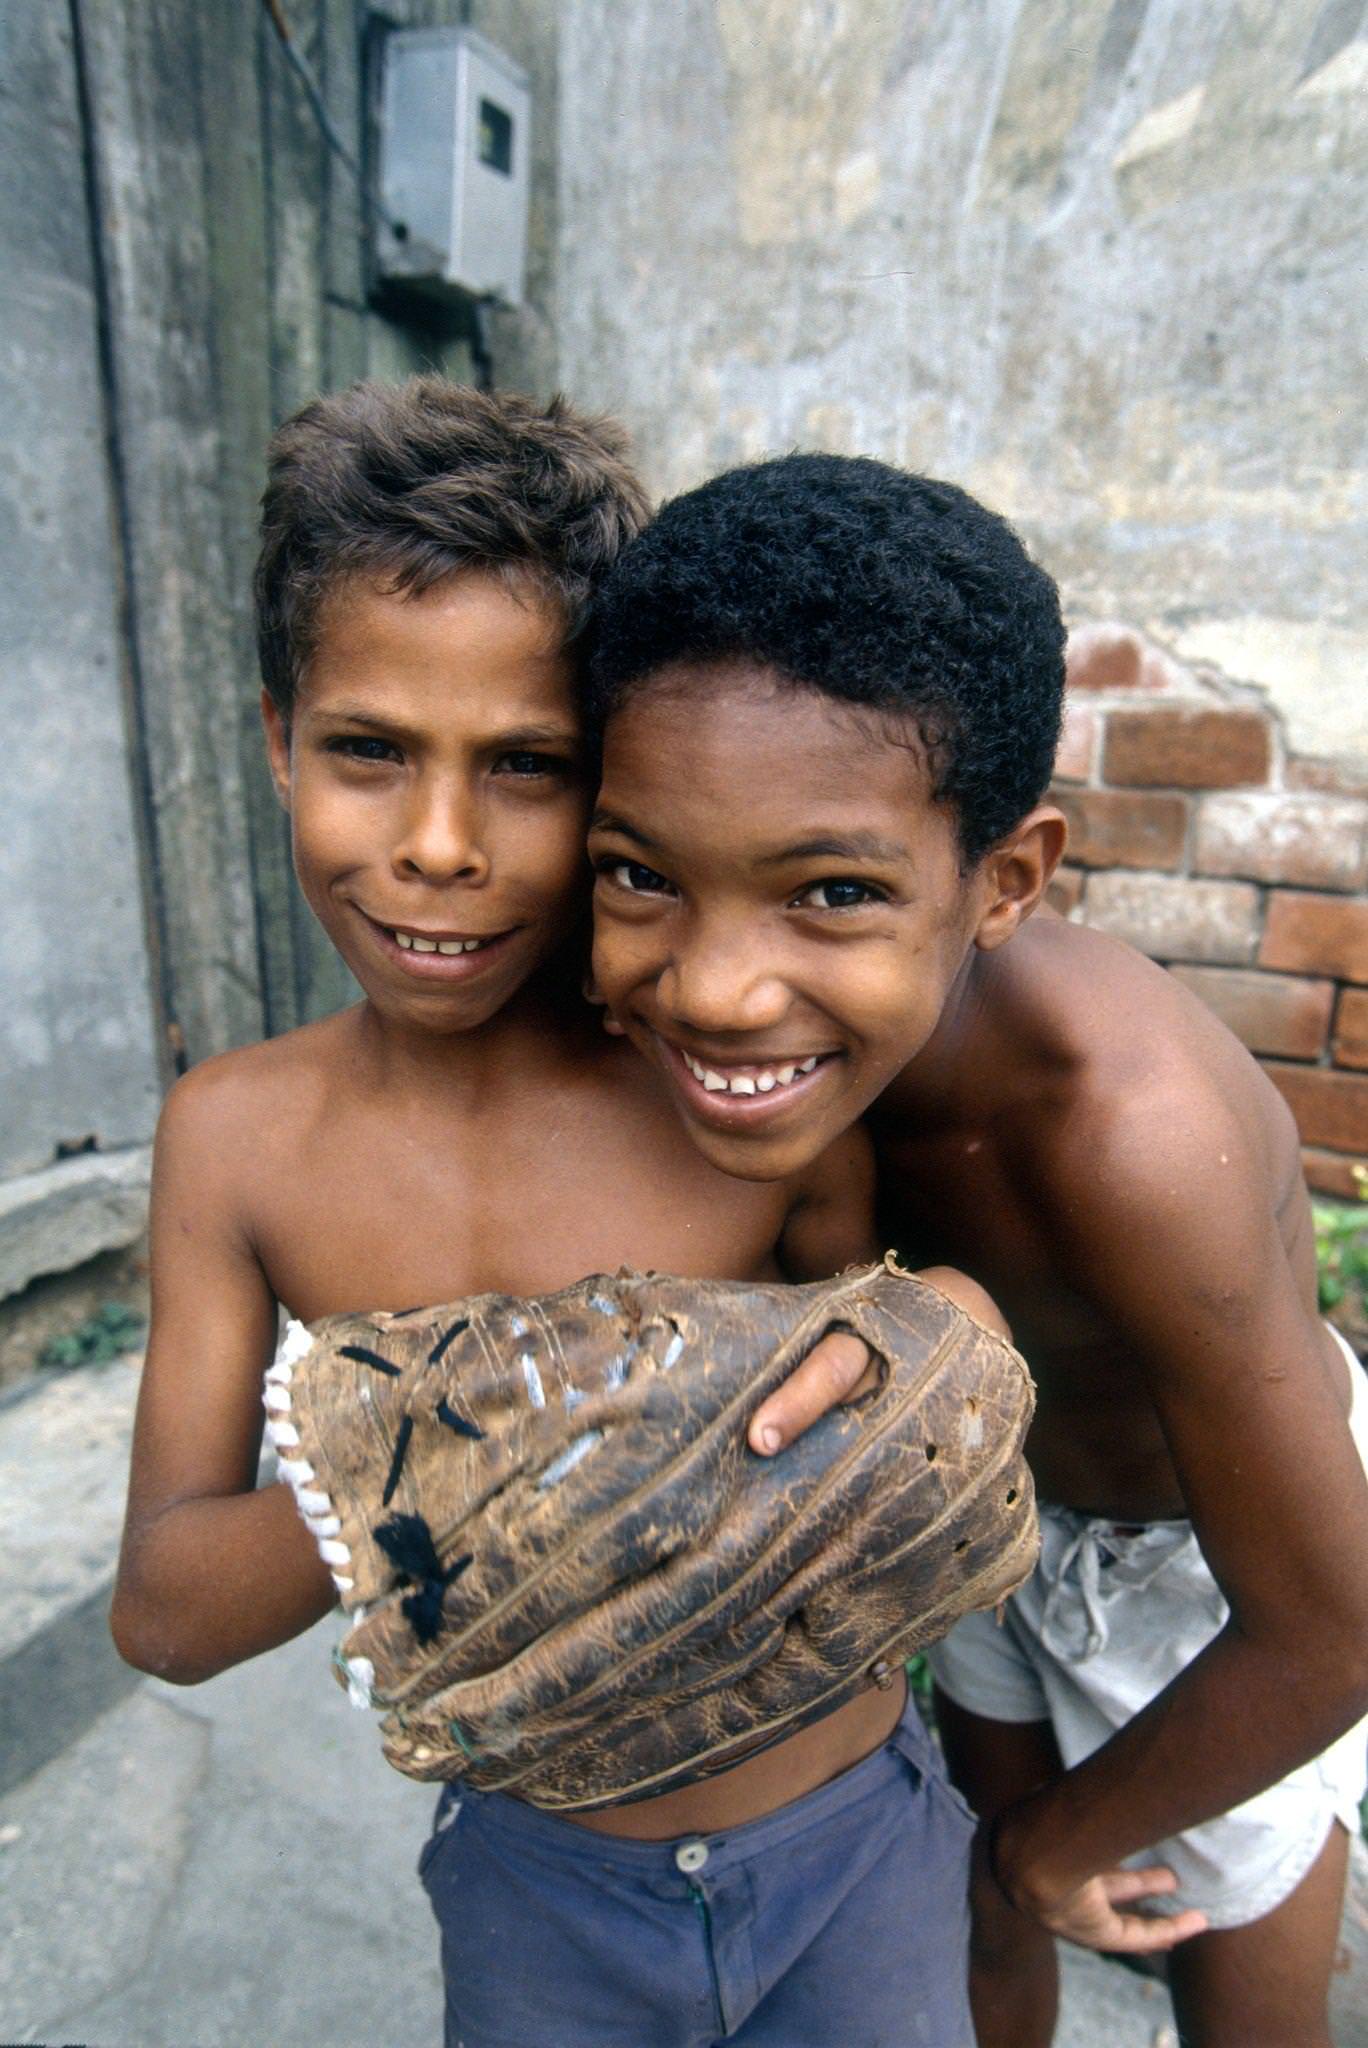 Two Cuban children posing while playing baseball in the street, Cuba, 1990.